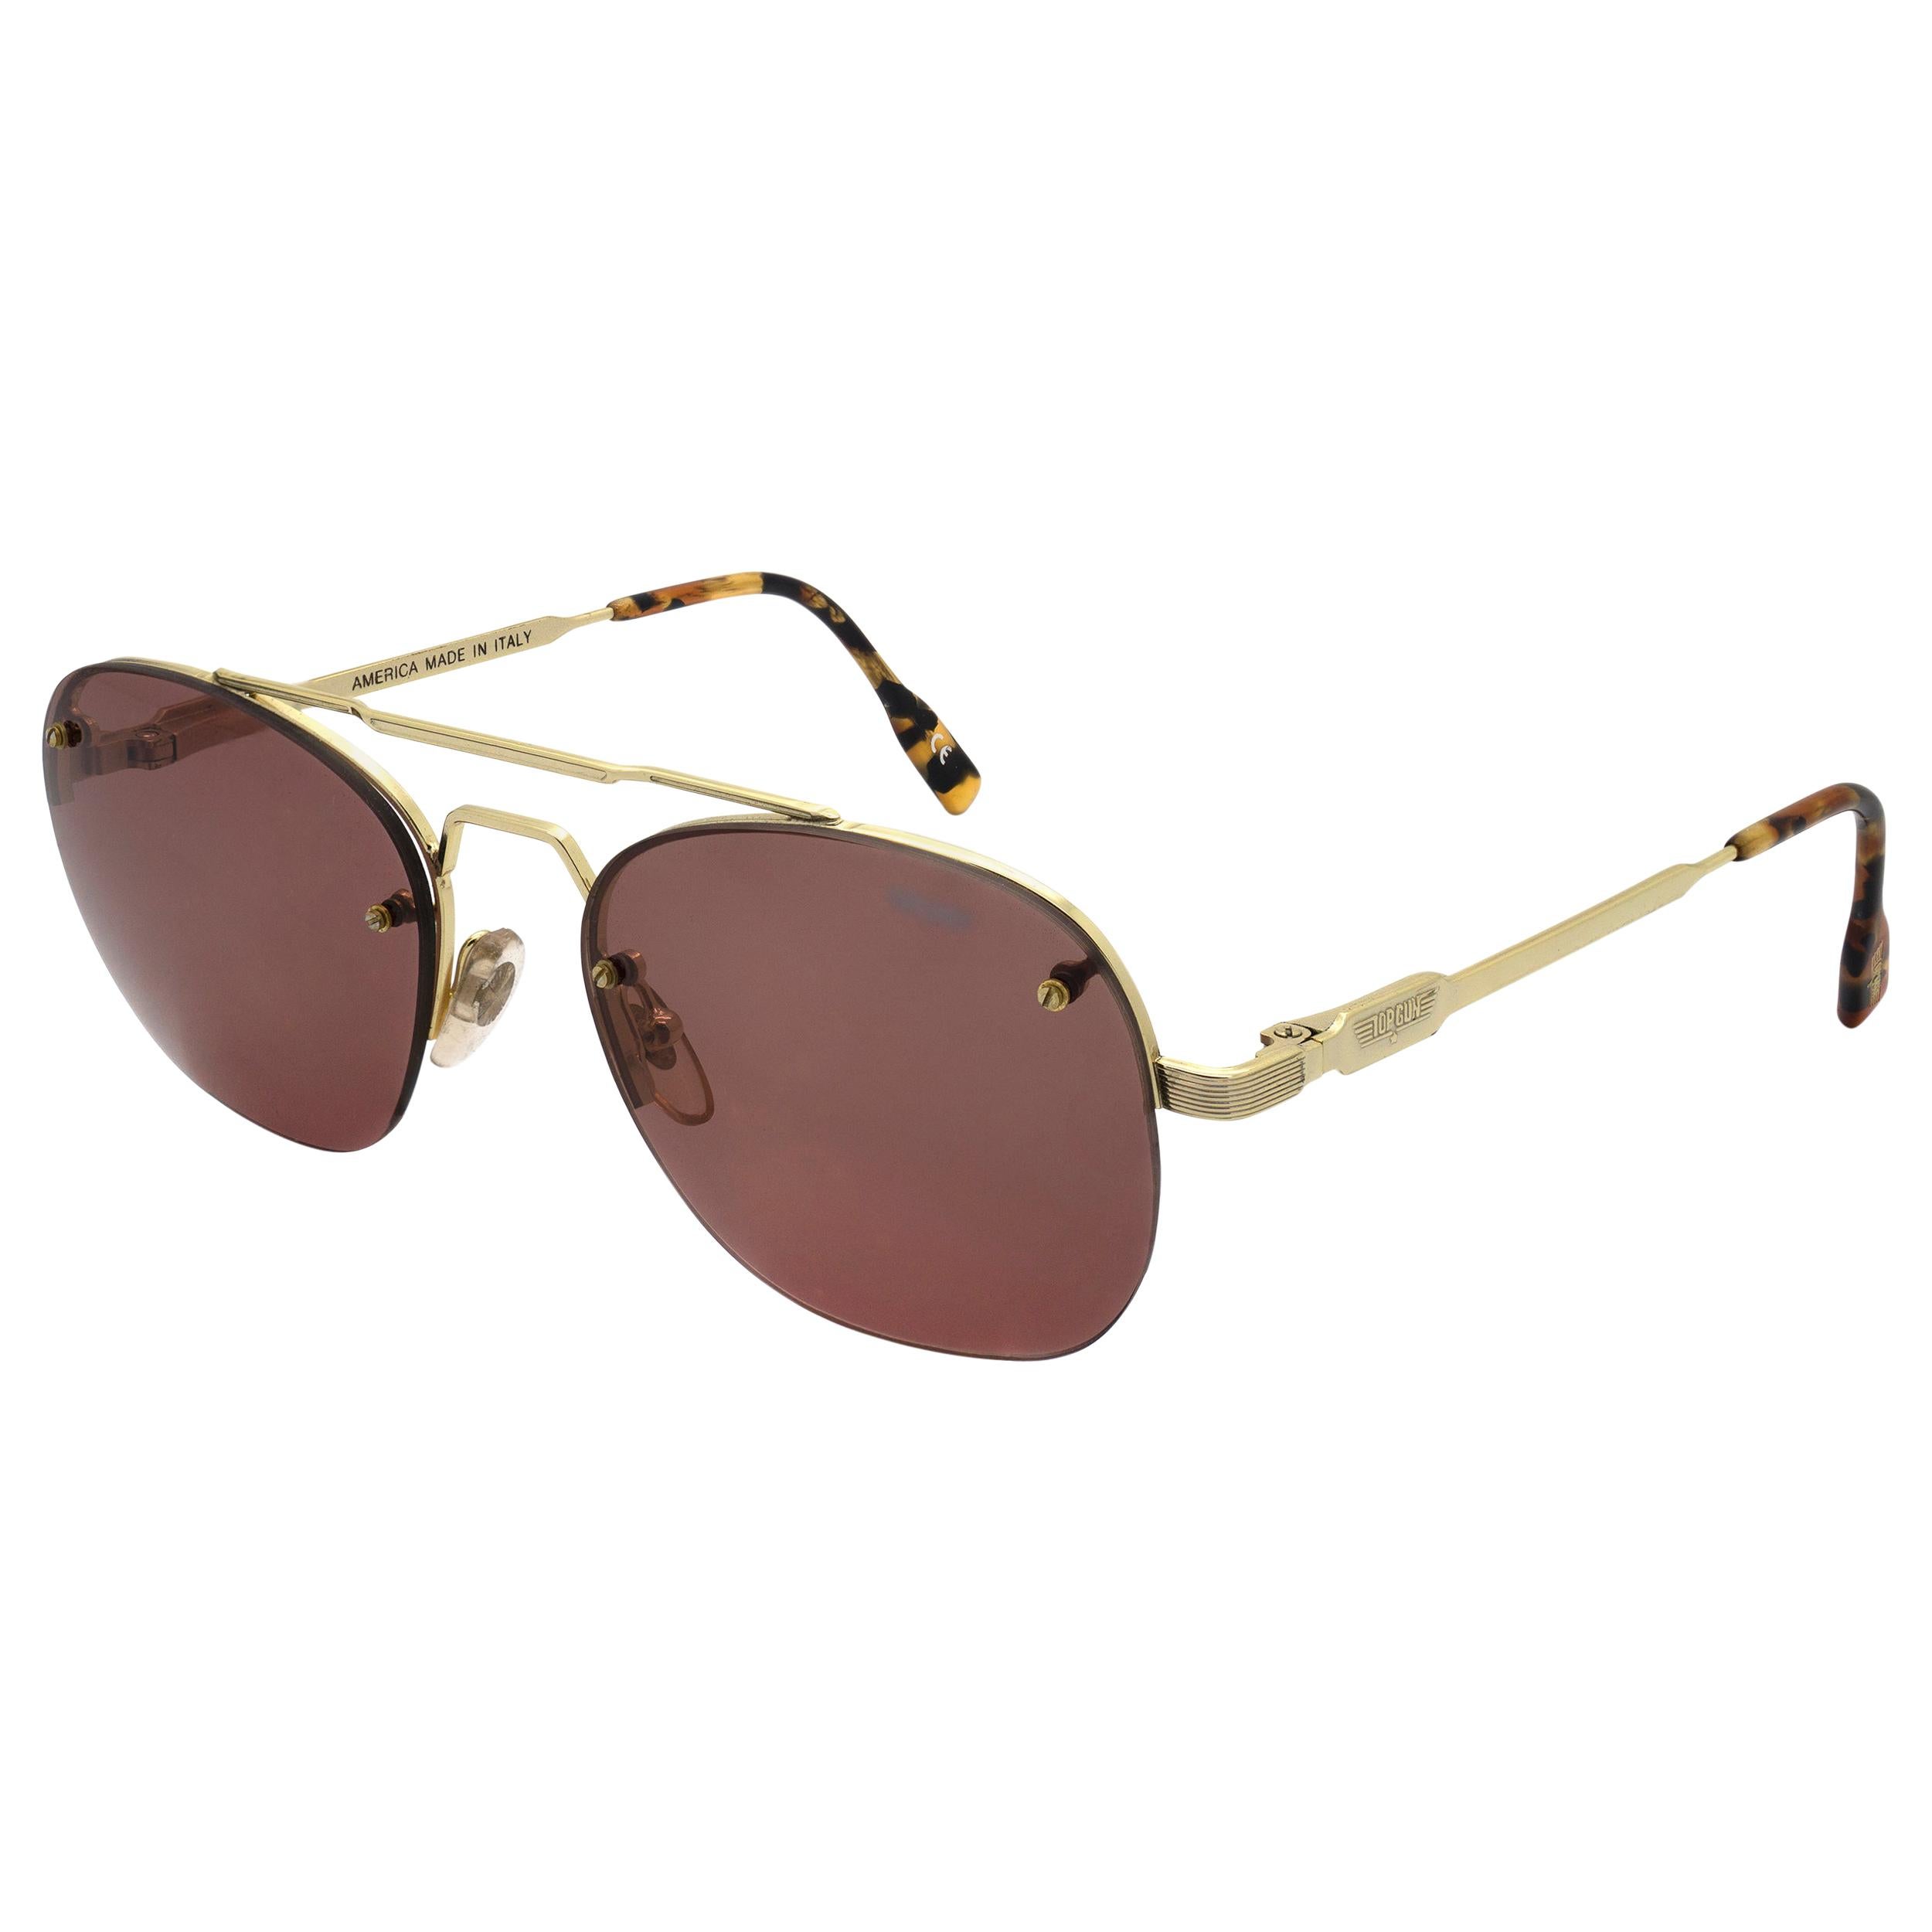 Top Gun aviator vintage sunglasses, Italy 90s